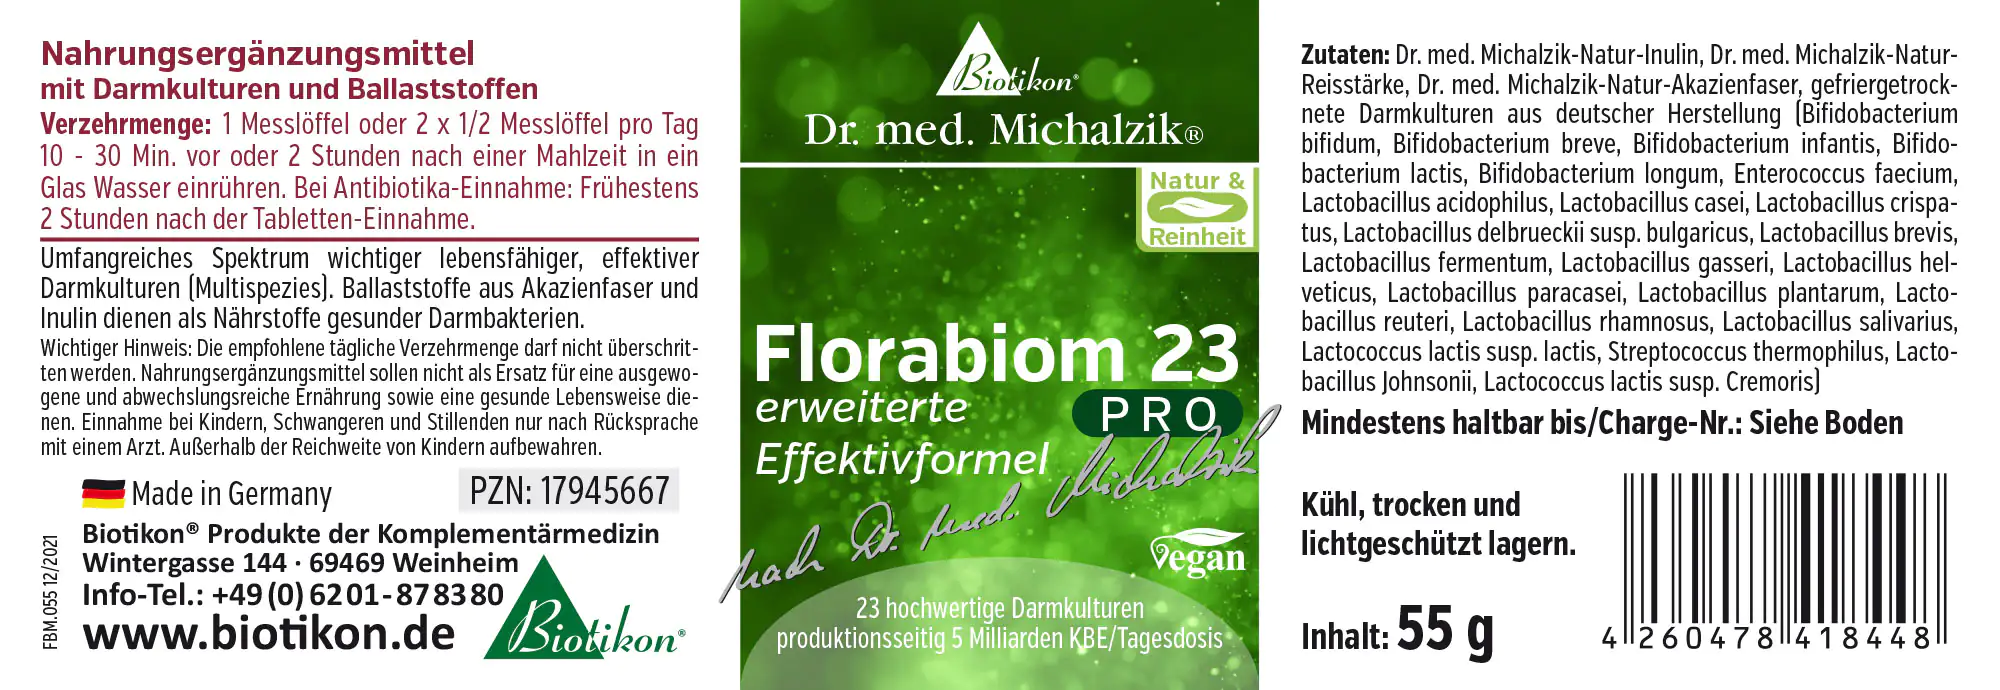 Florabiome 23 PRO